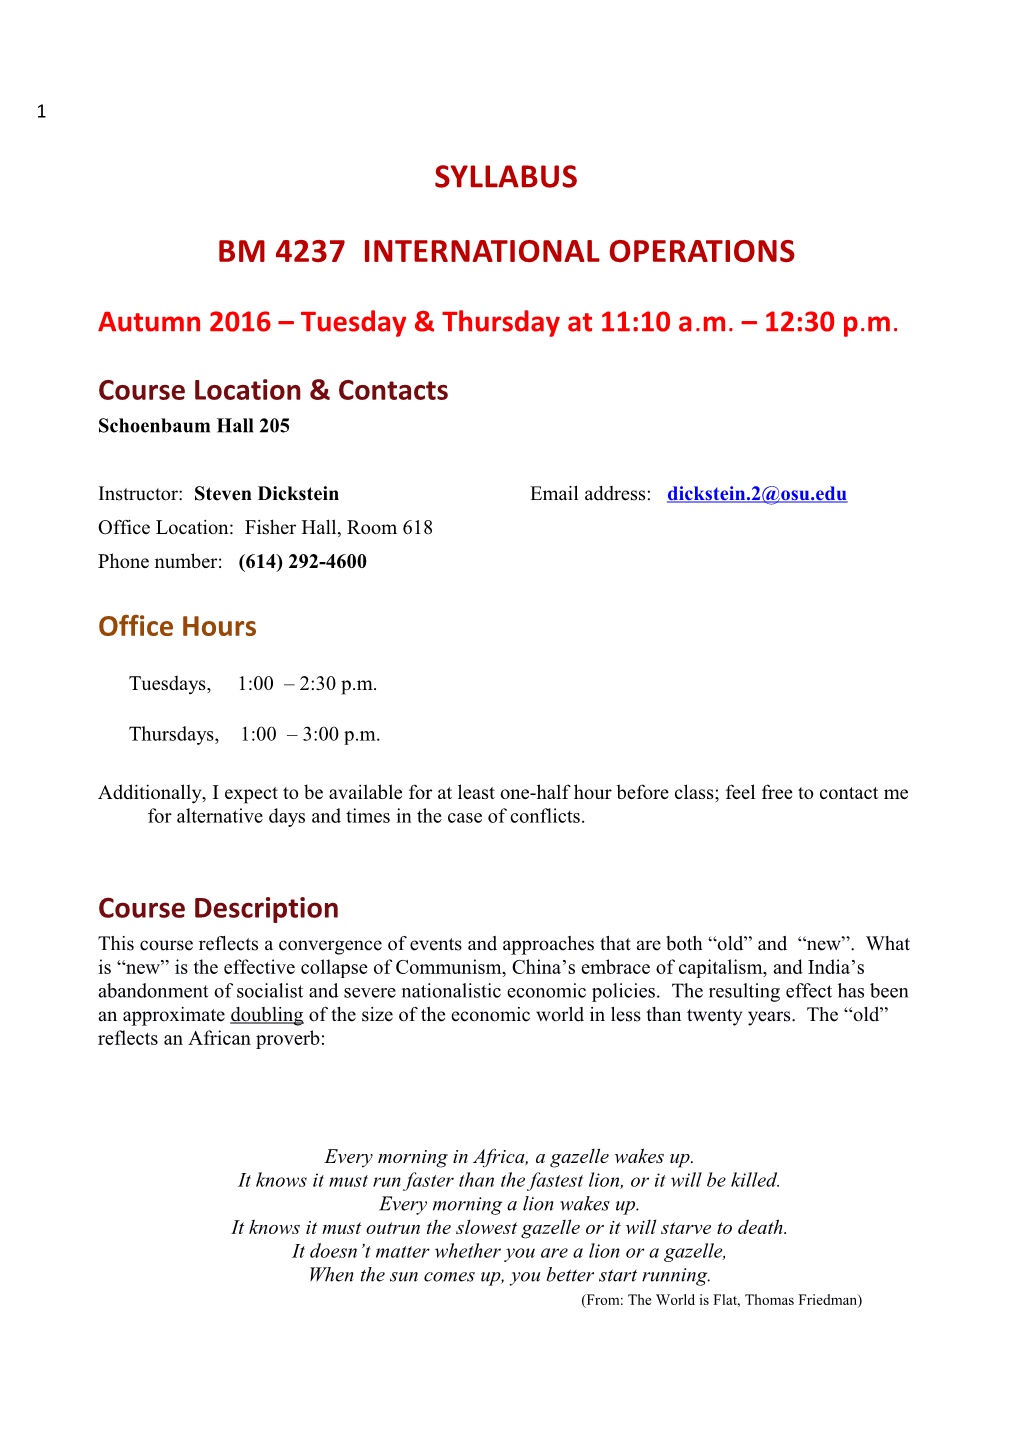 BM 4237 International Operations